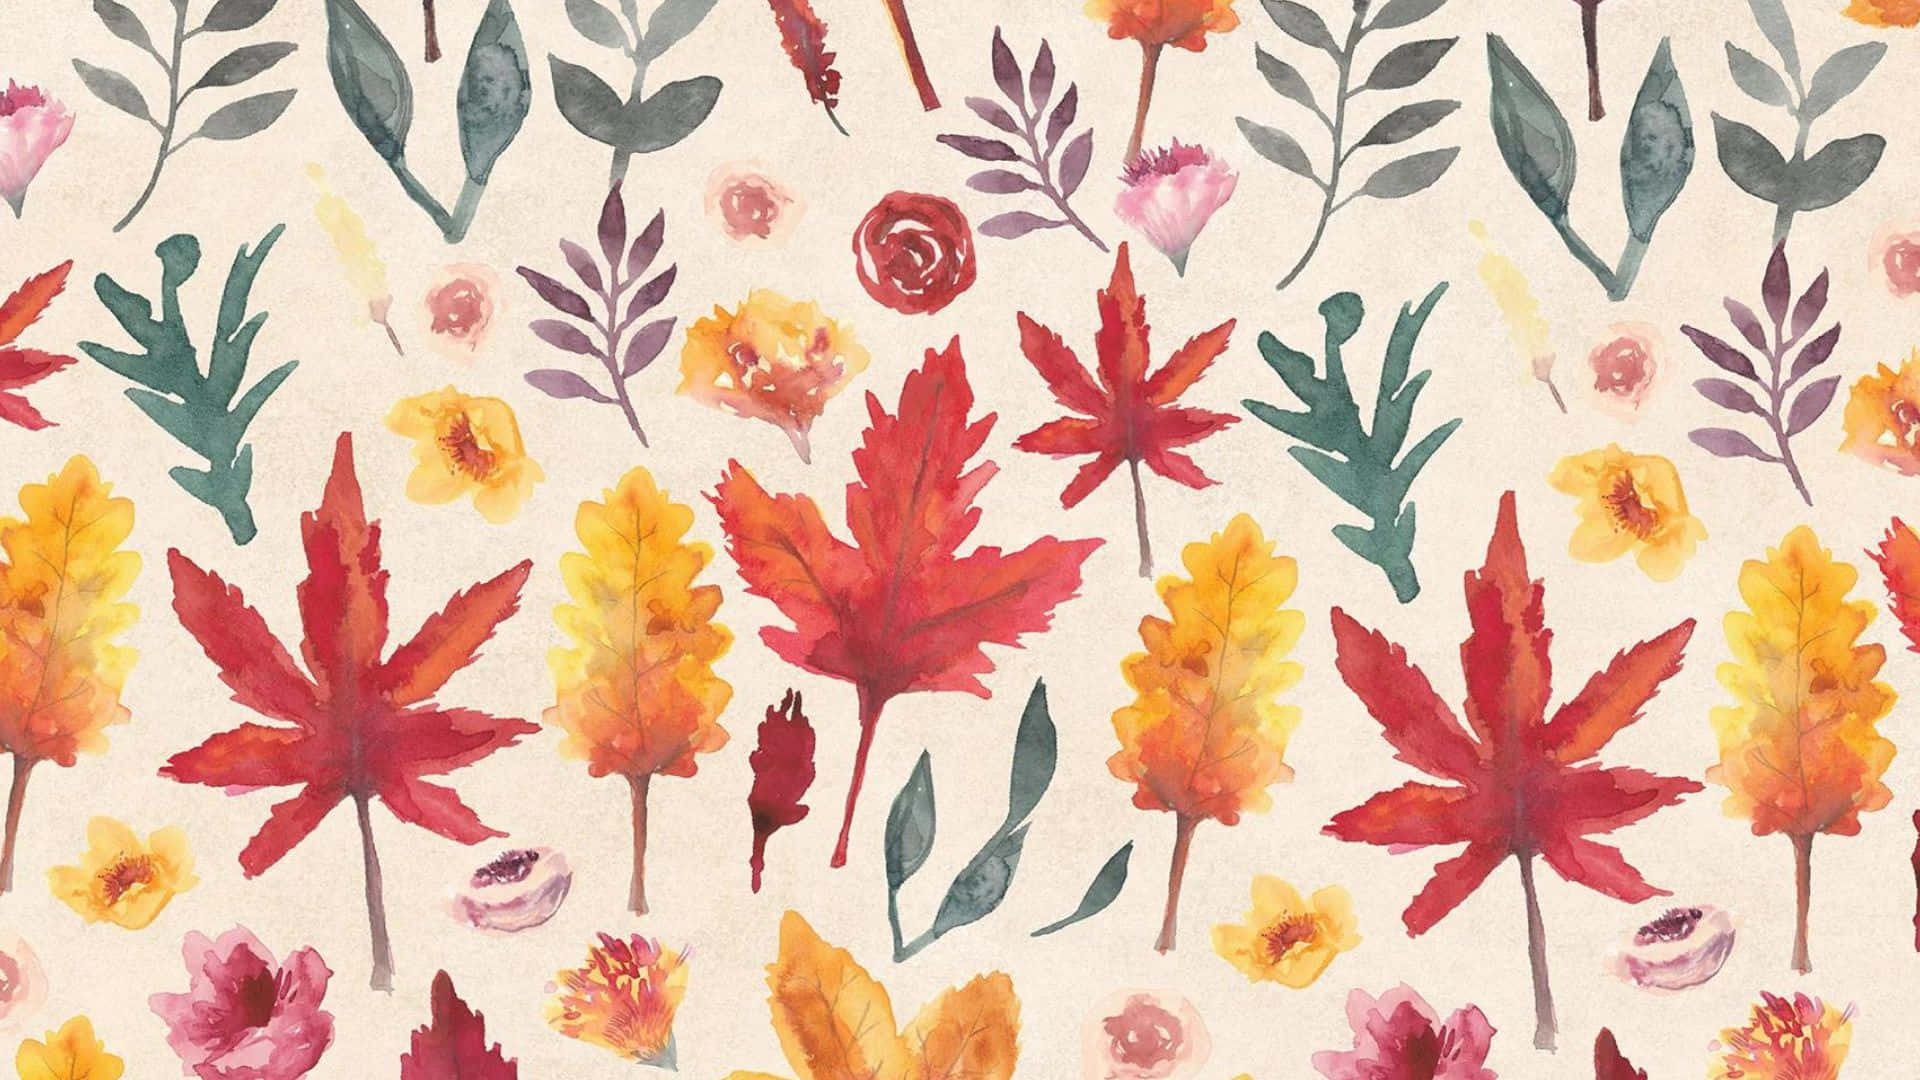 Captivating Fall Foliage Scenery Wallpaper